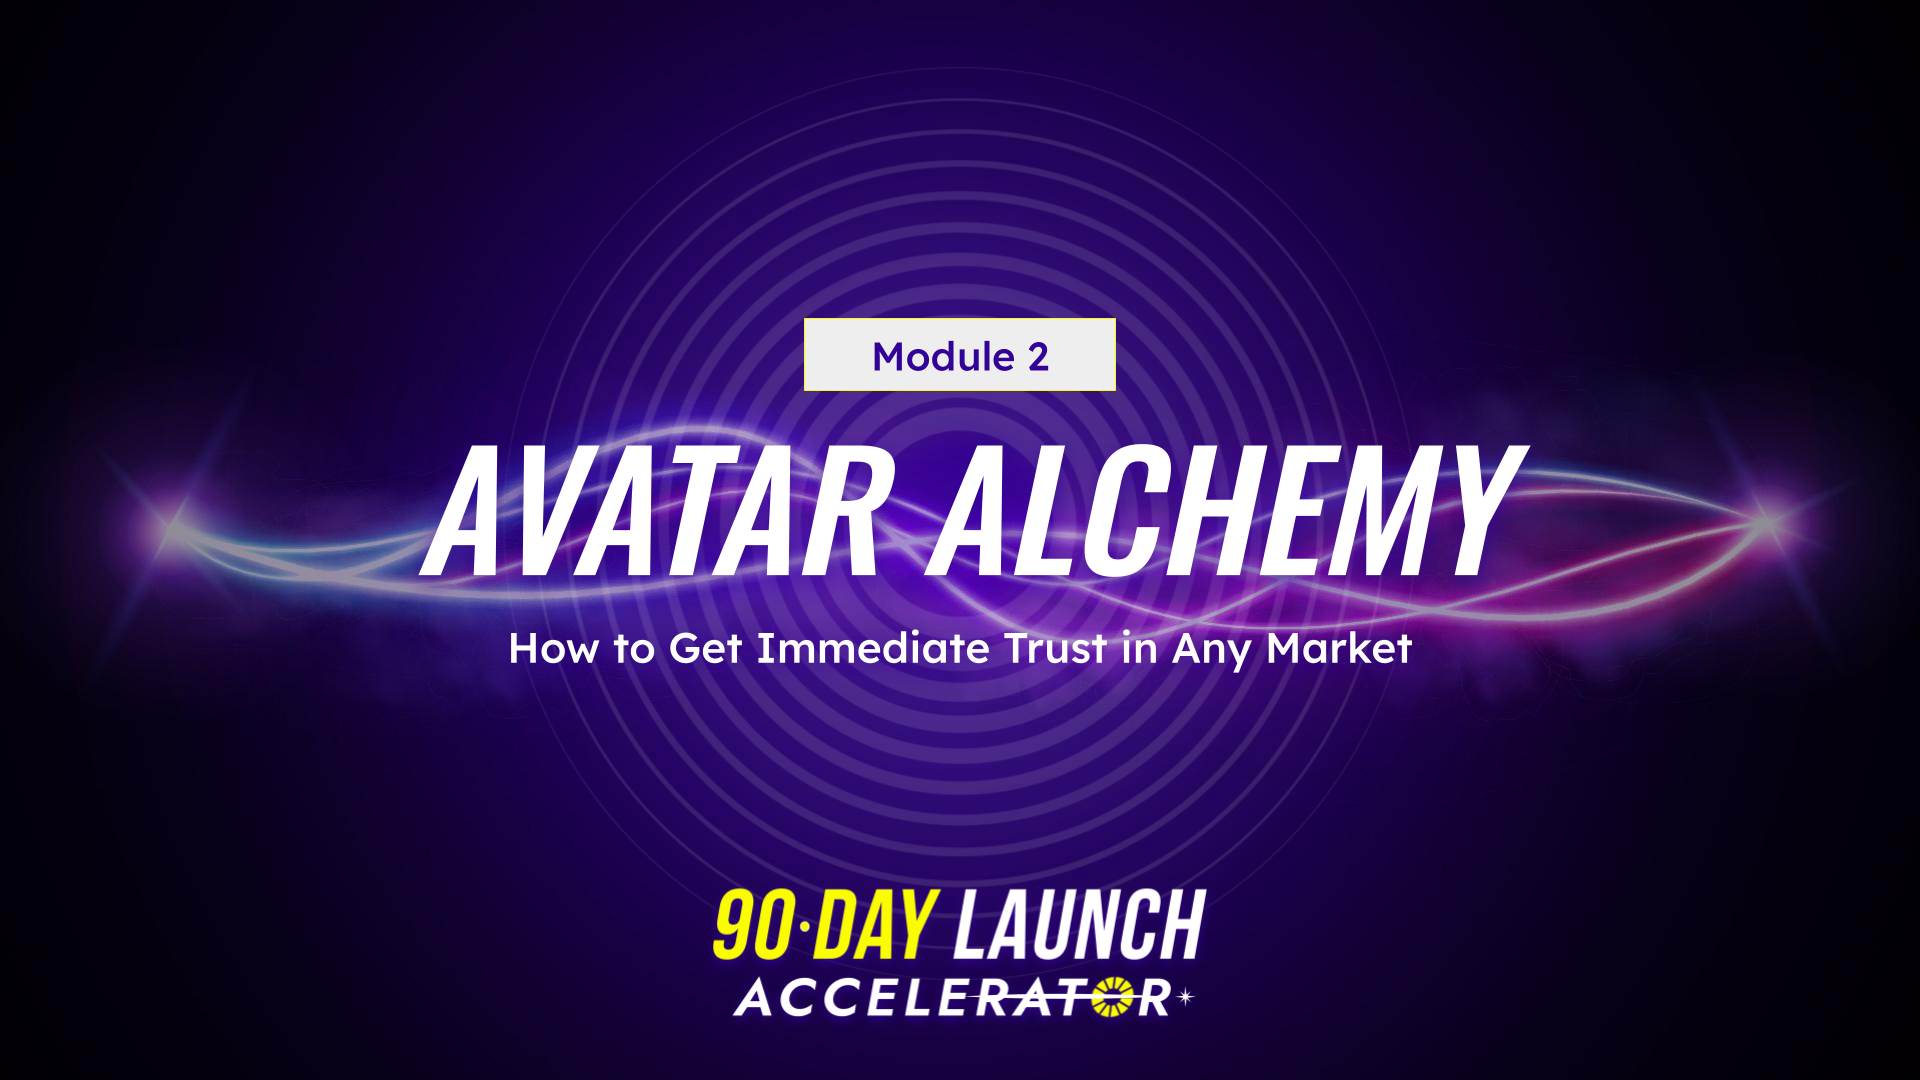 Module 2: Avatar Alchemy